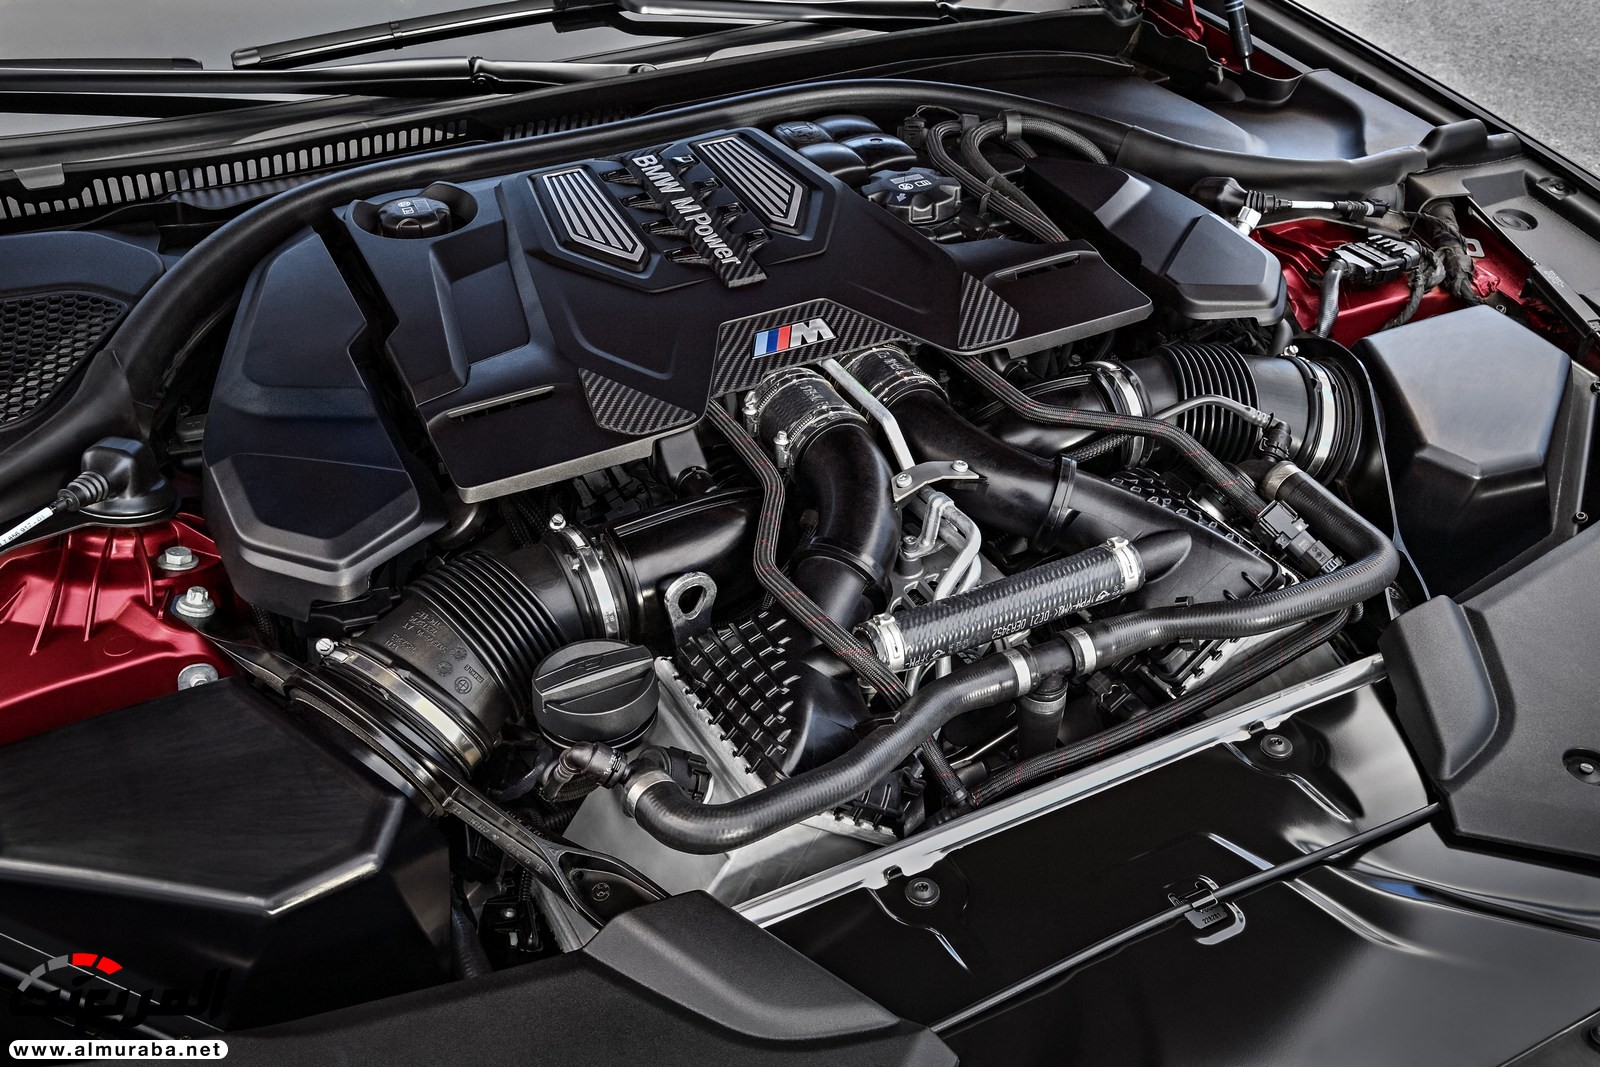 بي ام دبليو M5 2018 تكشف نفسها رسمياً بقوة ٦٠٠ حصان "صور ومواصفات" BMW 49